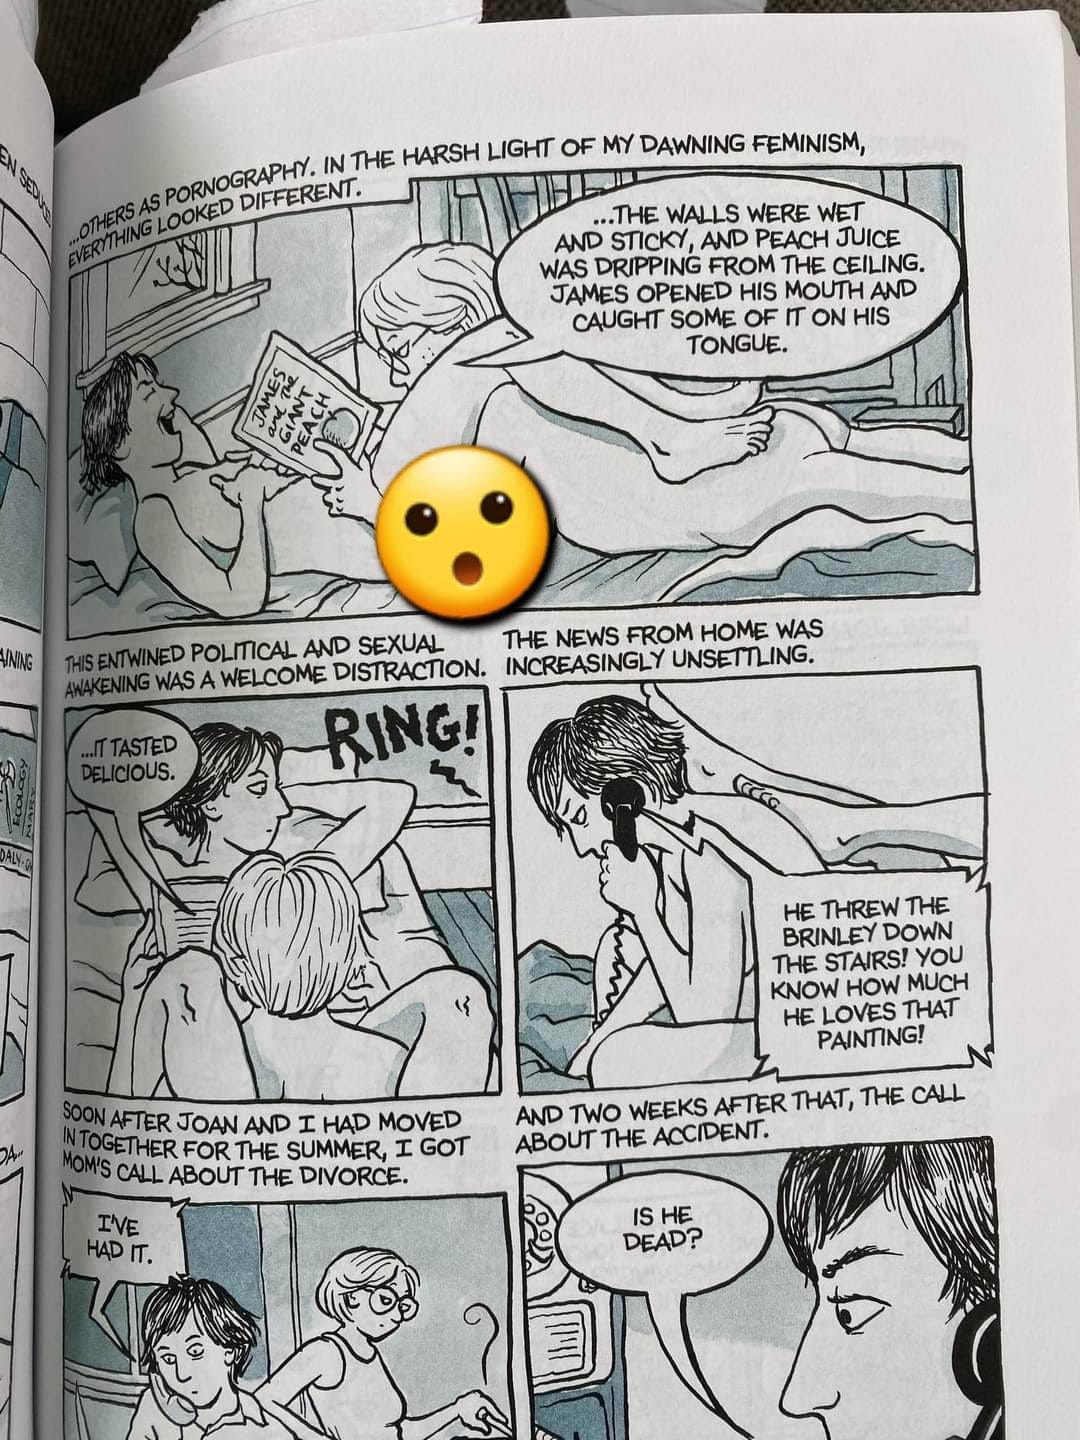 How to write graphic porno comics